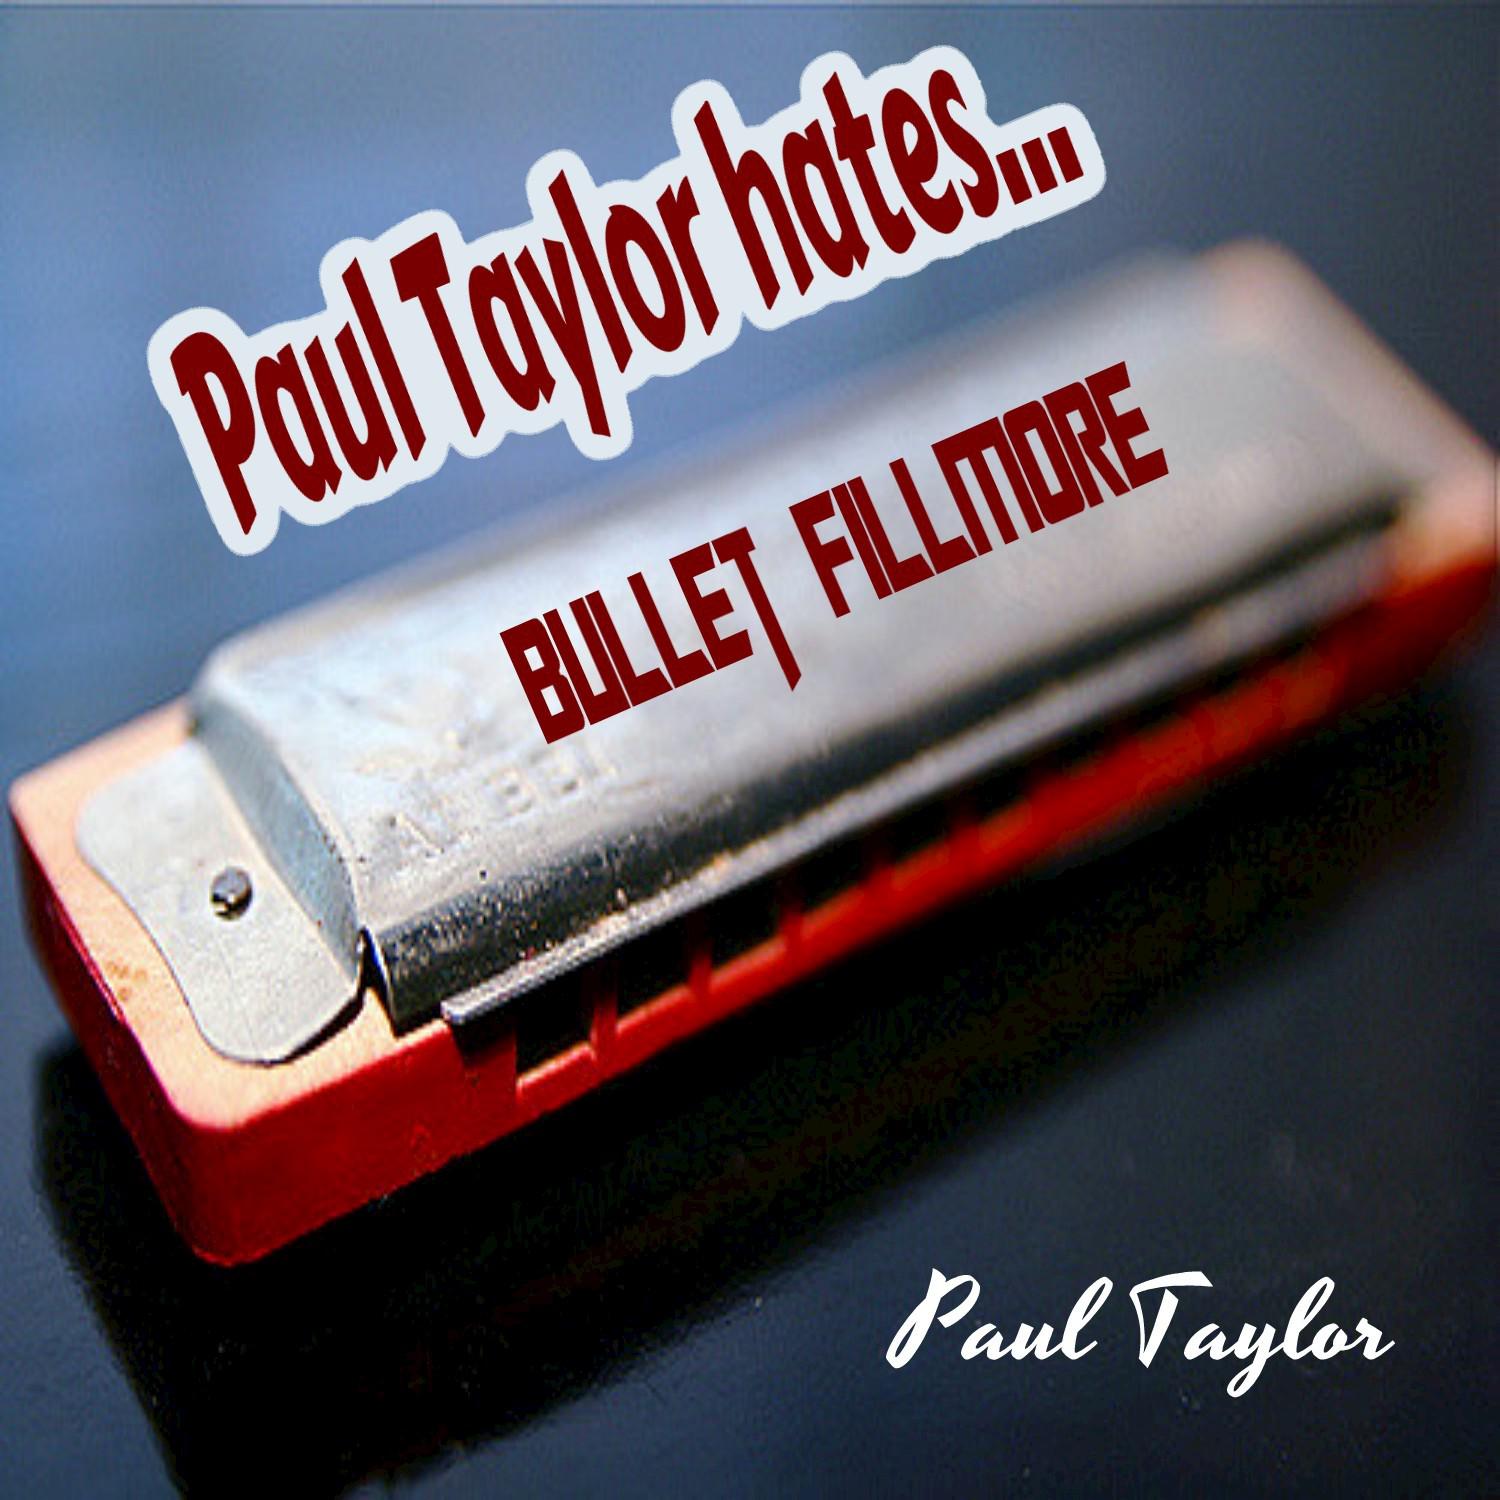 Paul Taylor Hates Bullet Fillmore专辑